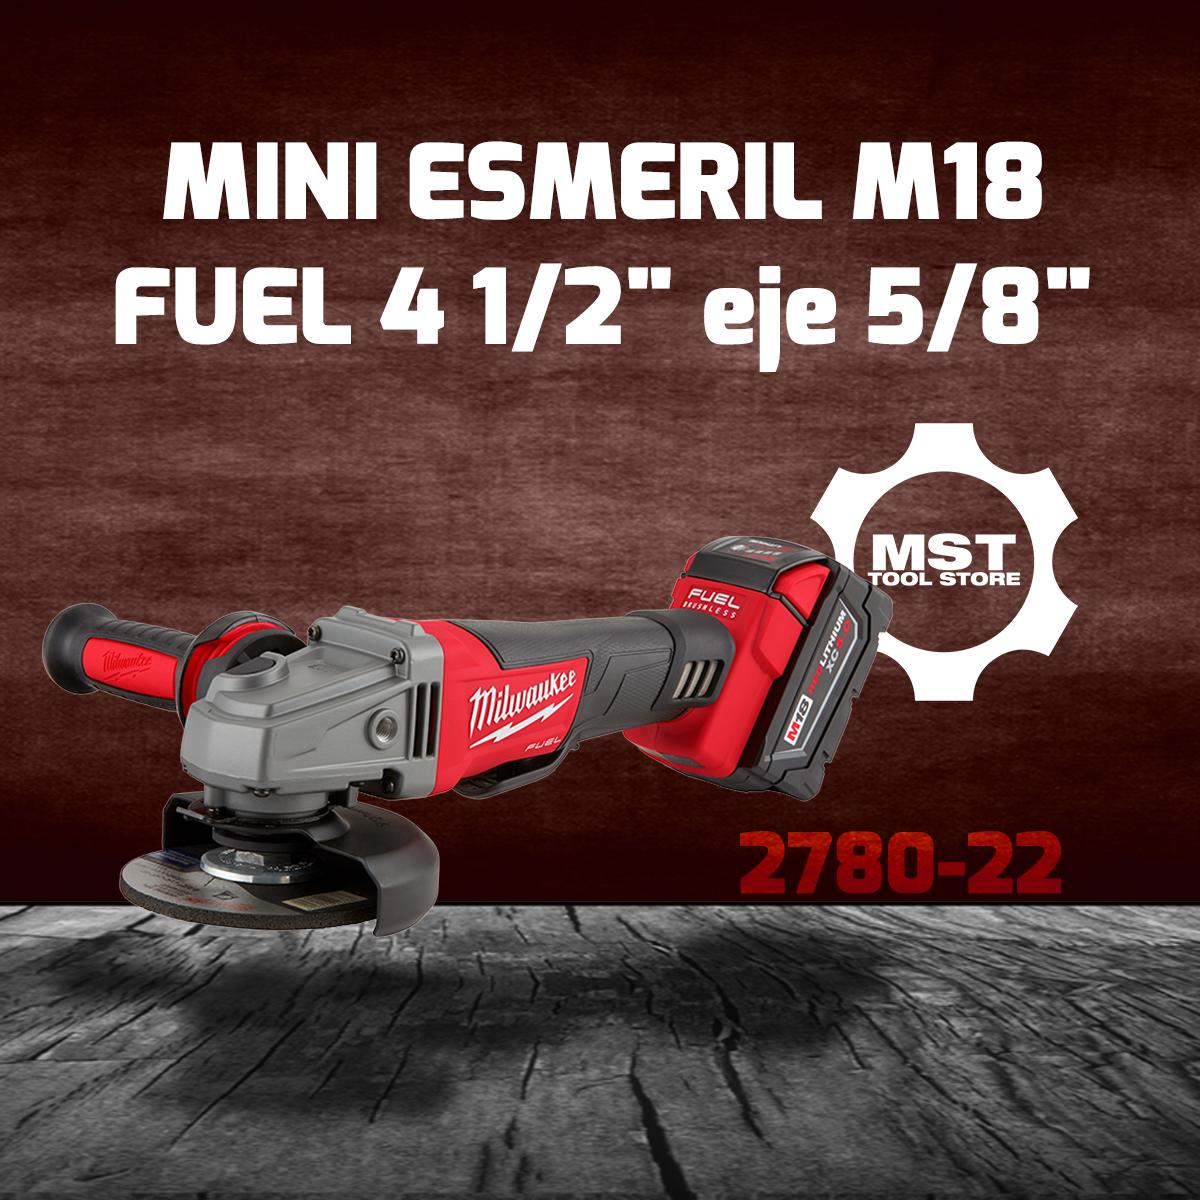 MILWAUKEE 2780-22 MINI ESMERIL M18 FUEL 4 1/2" eje 5/8"